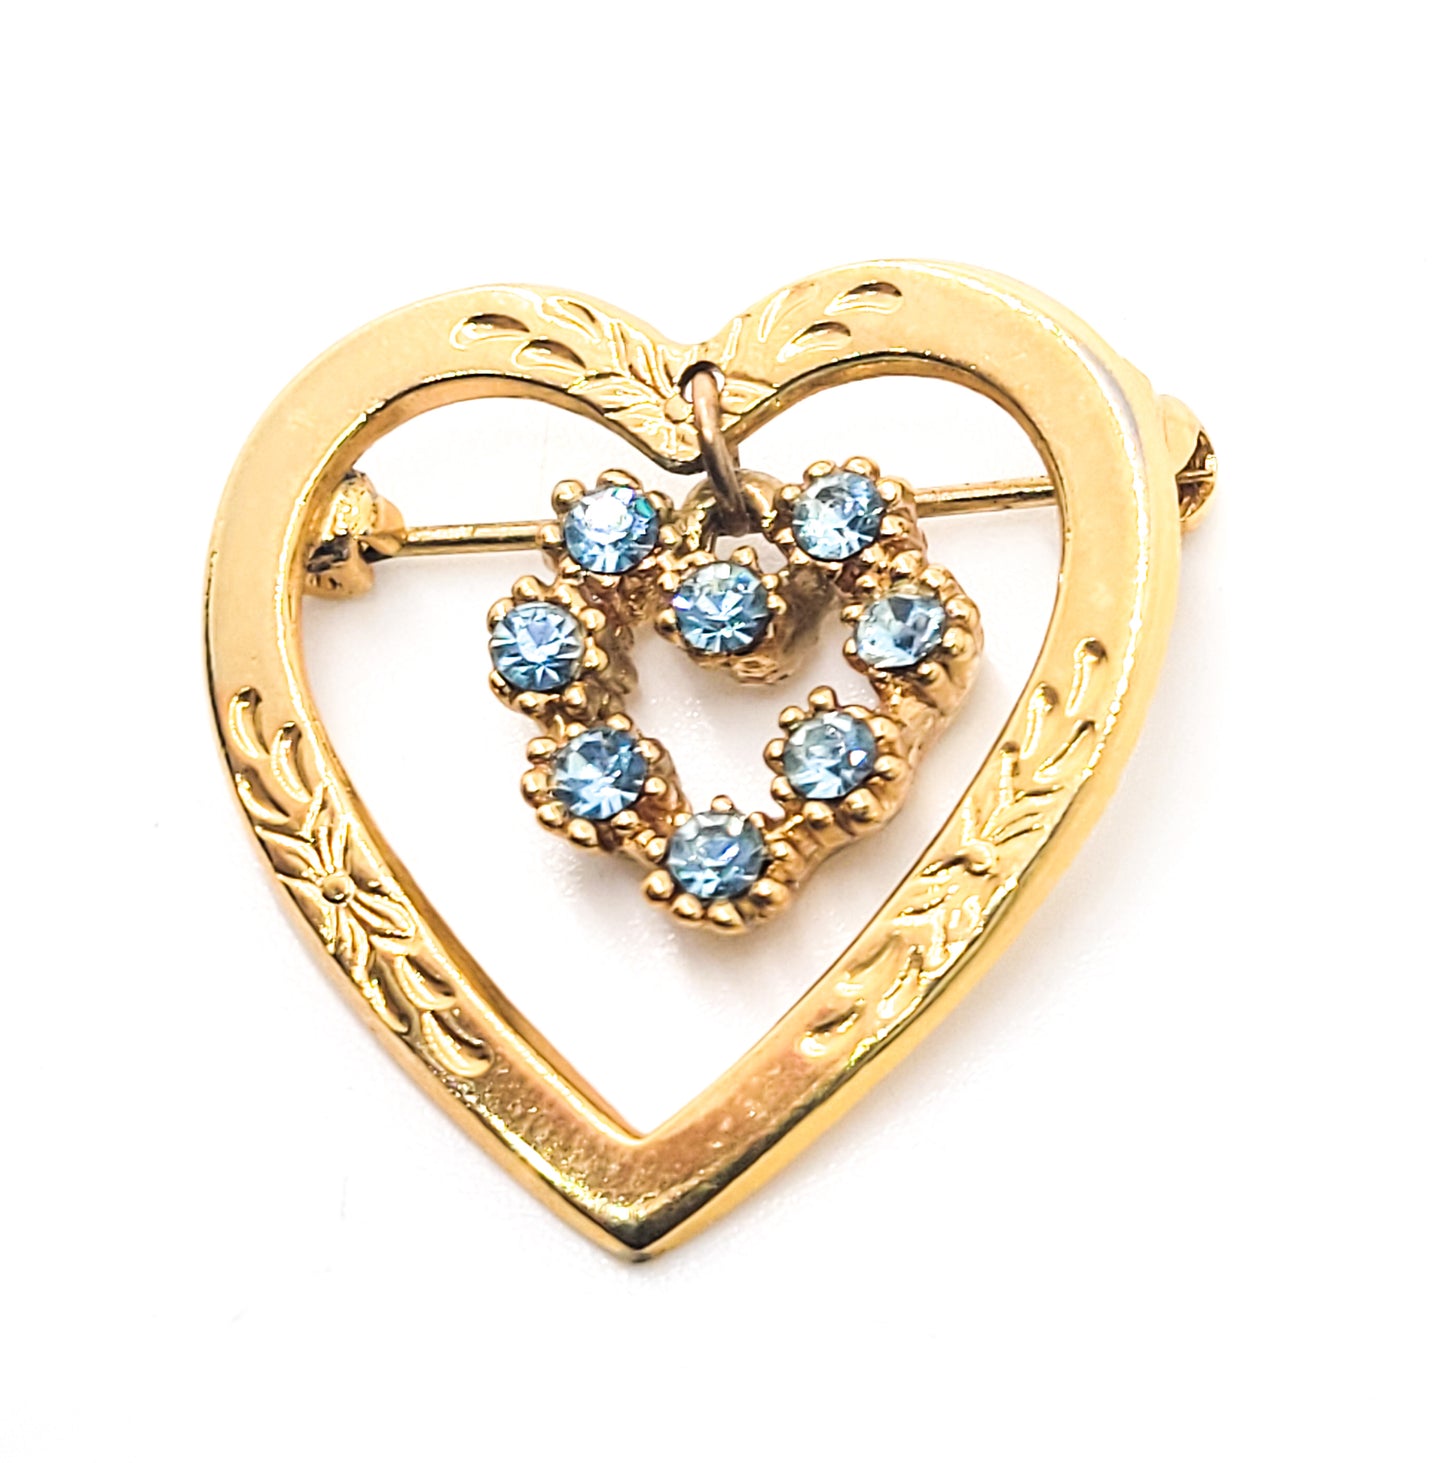 Aqua blue rhinstone gold toned etched heart charm vintage brooch